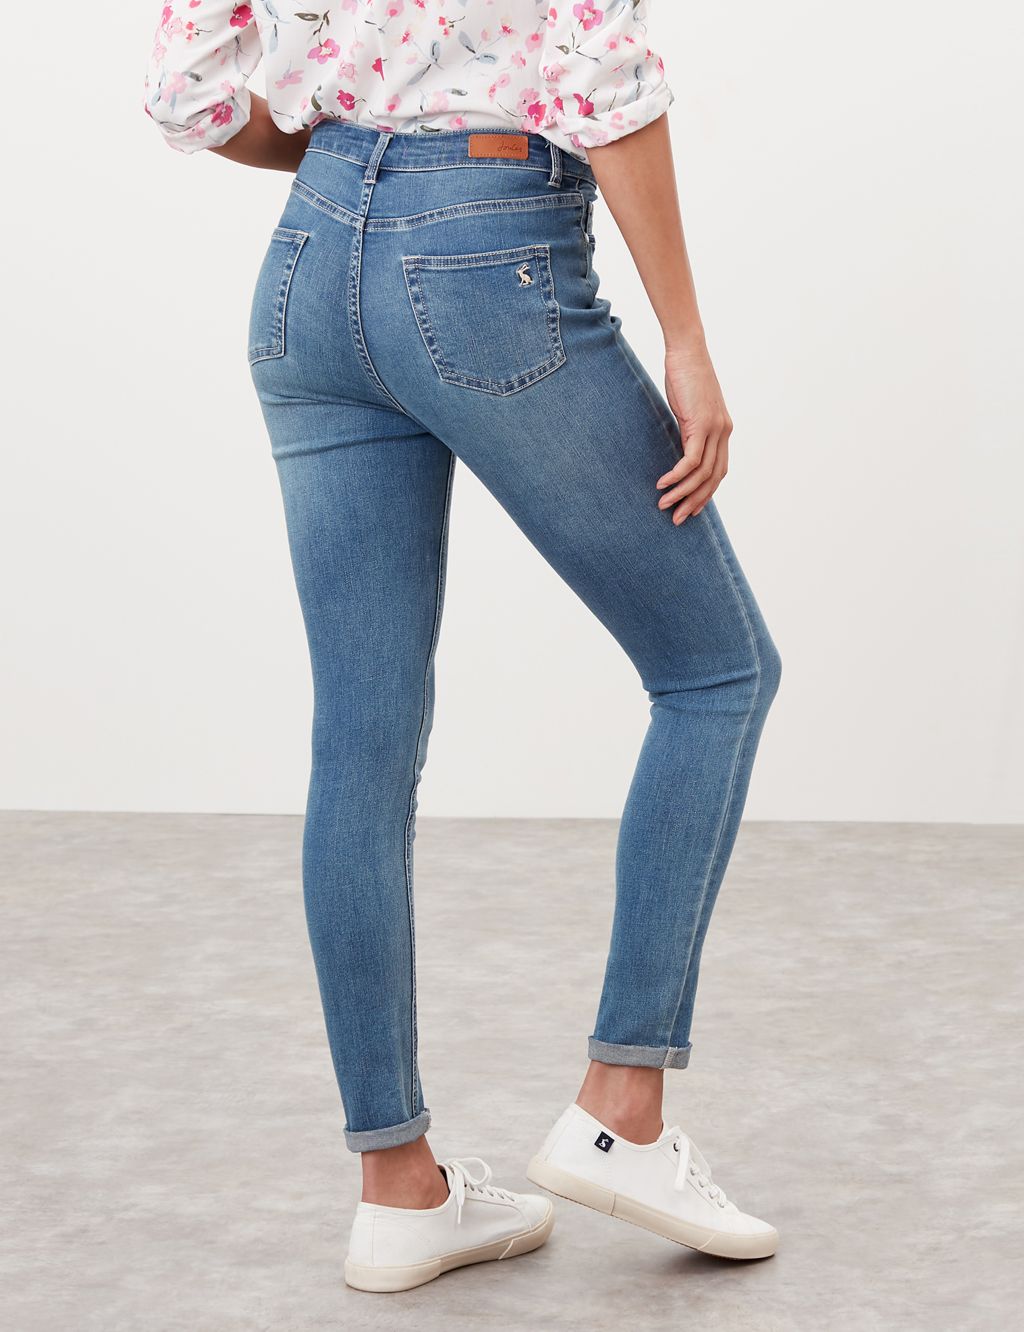 Monroe High Rise Skinny Jeans image 2